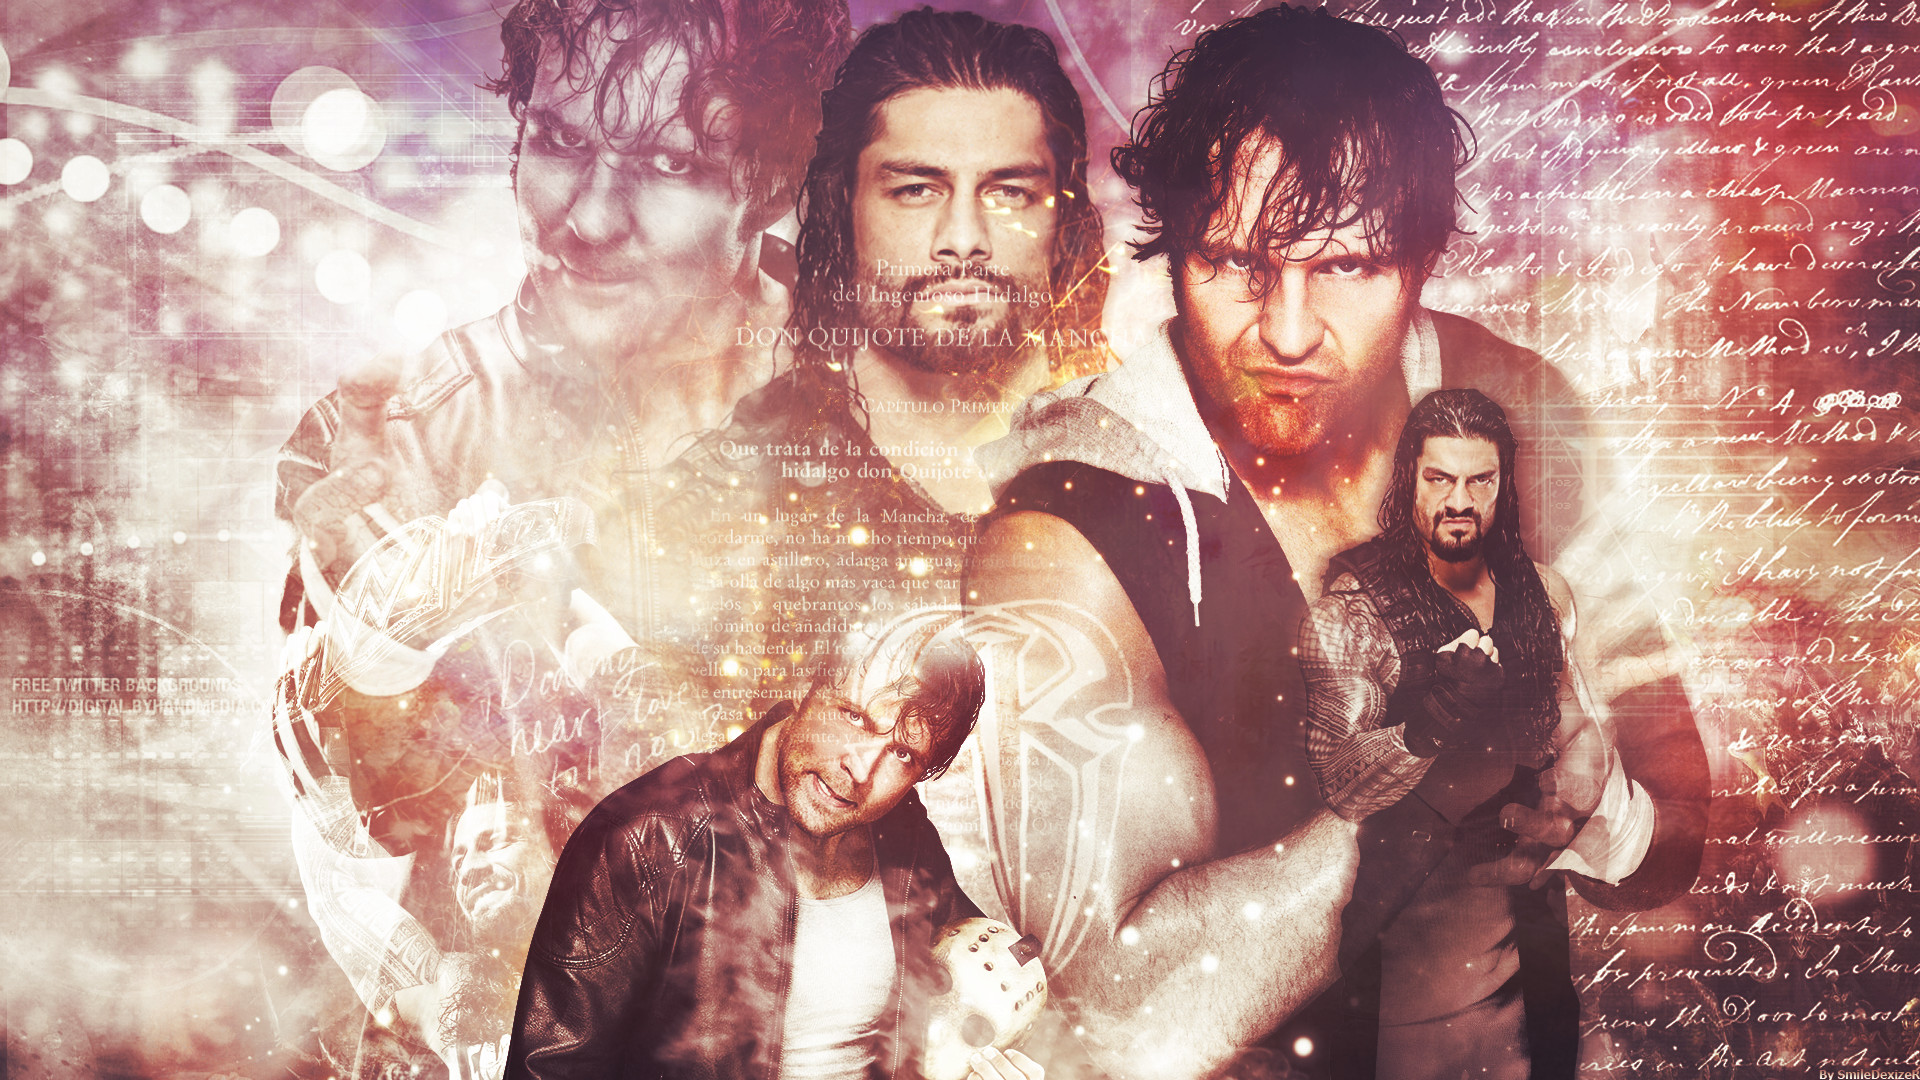 1920x1080 ... Roman Reigns and Dean Ambrose WWE Wallpaper by SmileDexizeR